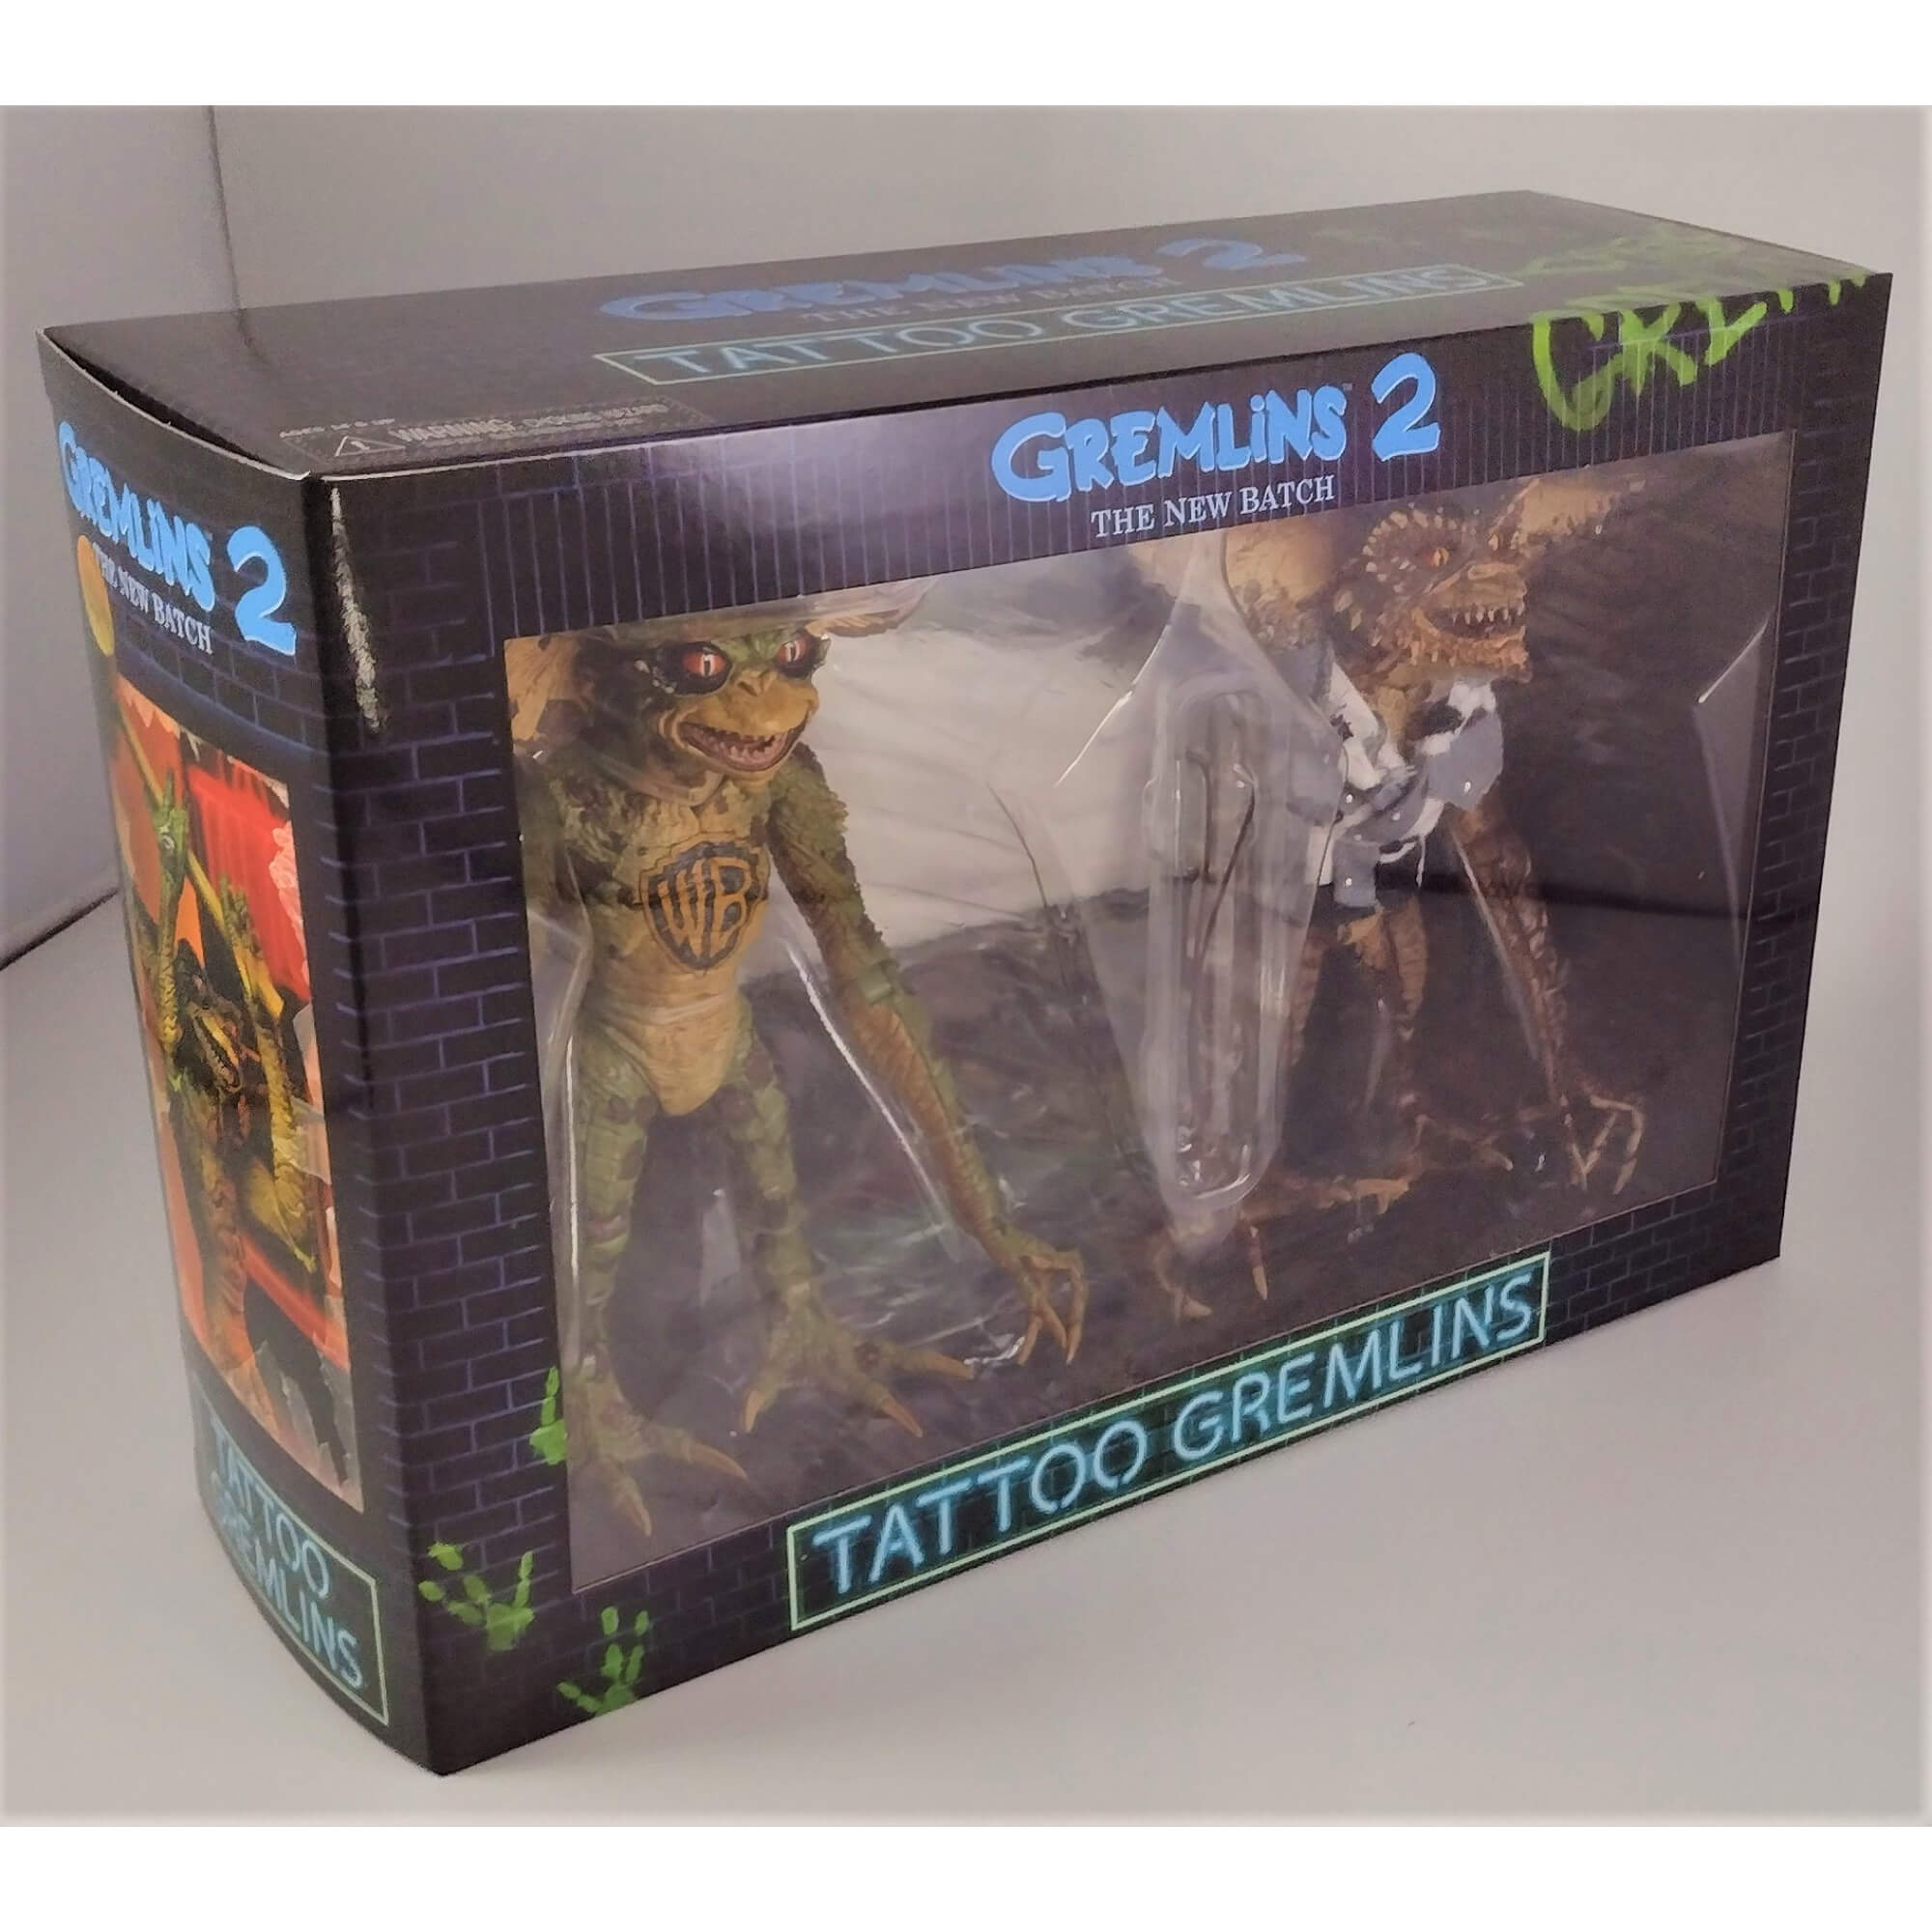 Toy Review: NECA Gremlins 2 Tattoo Gremlins Box Set